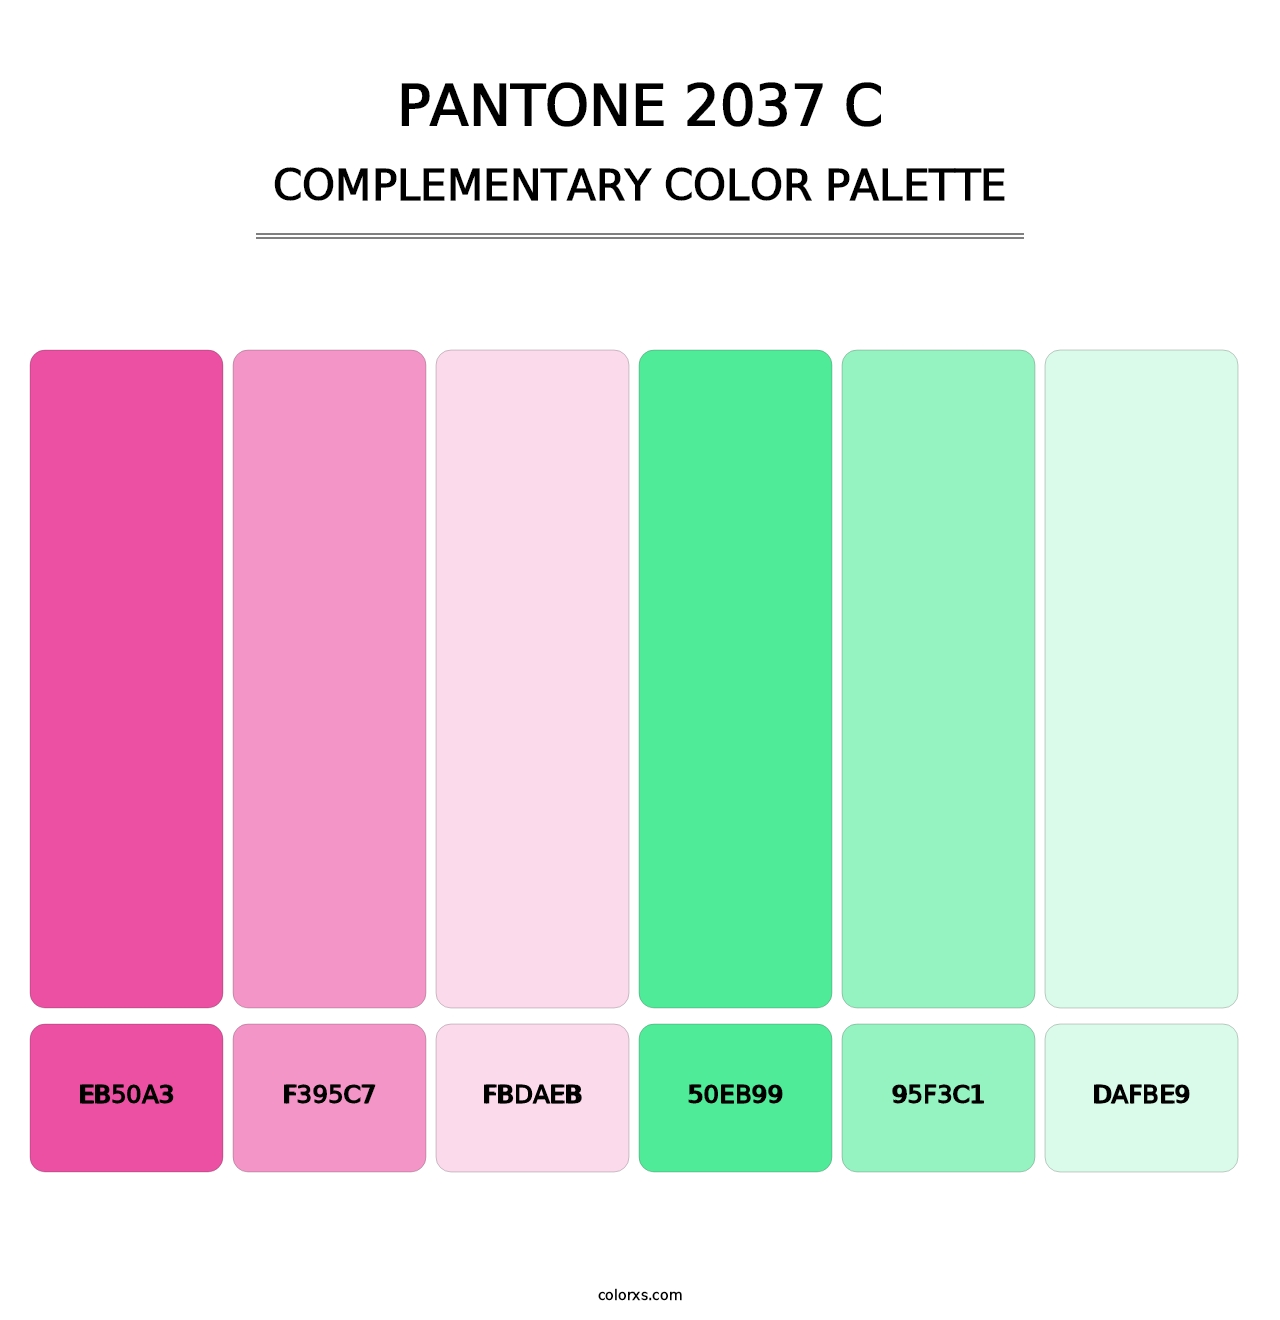 PANTONE 2037 C - Complementary Color Palette